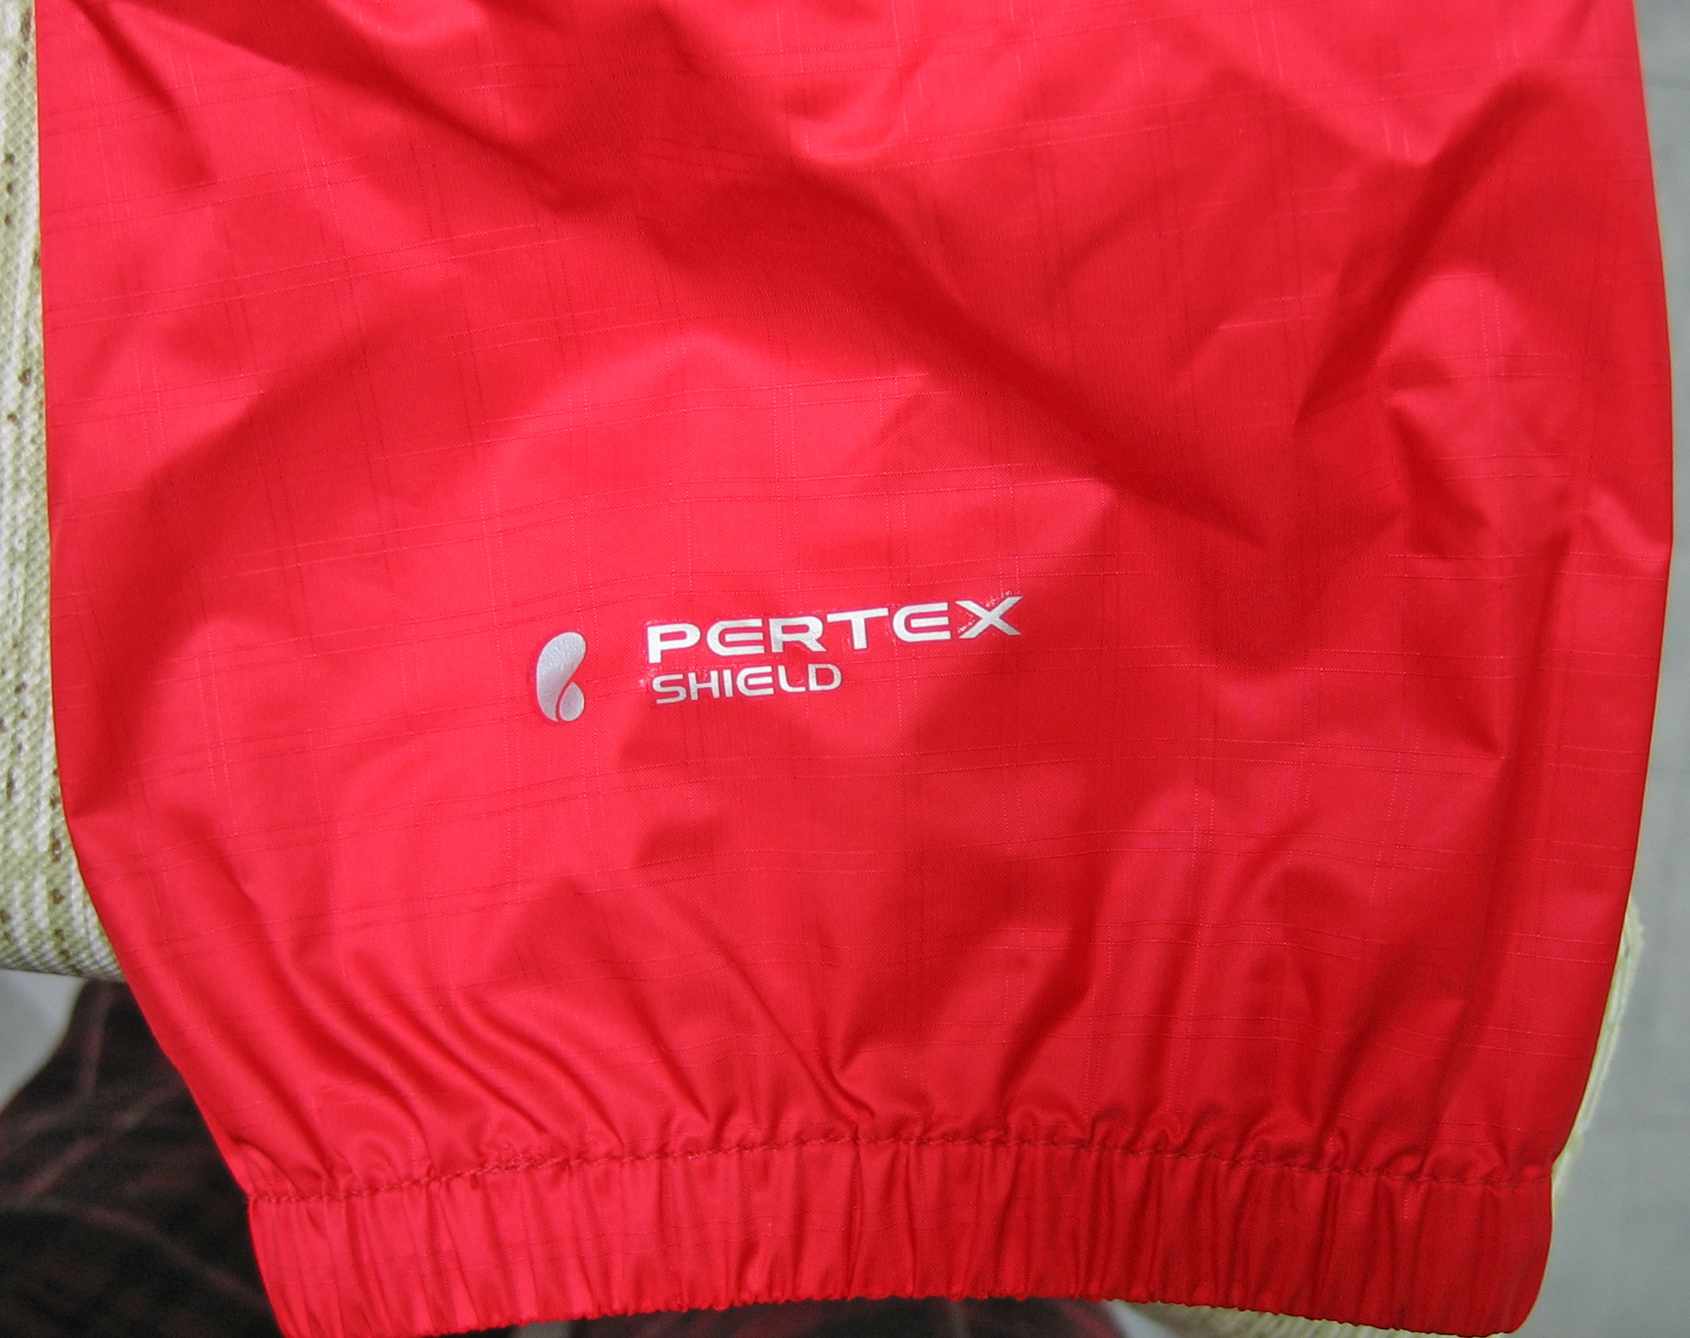 Pertex Fabric/Elastic Cuff